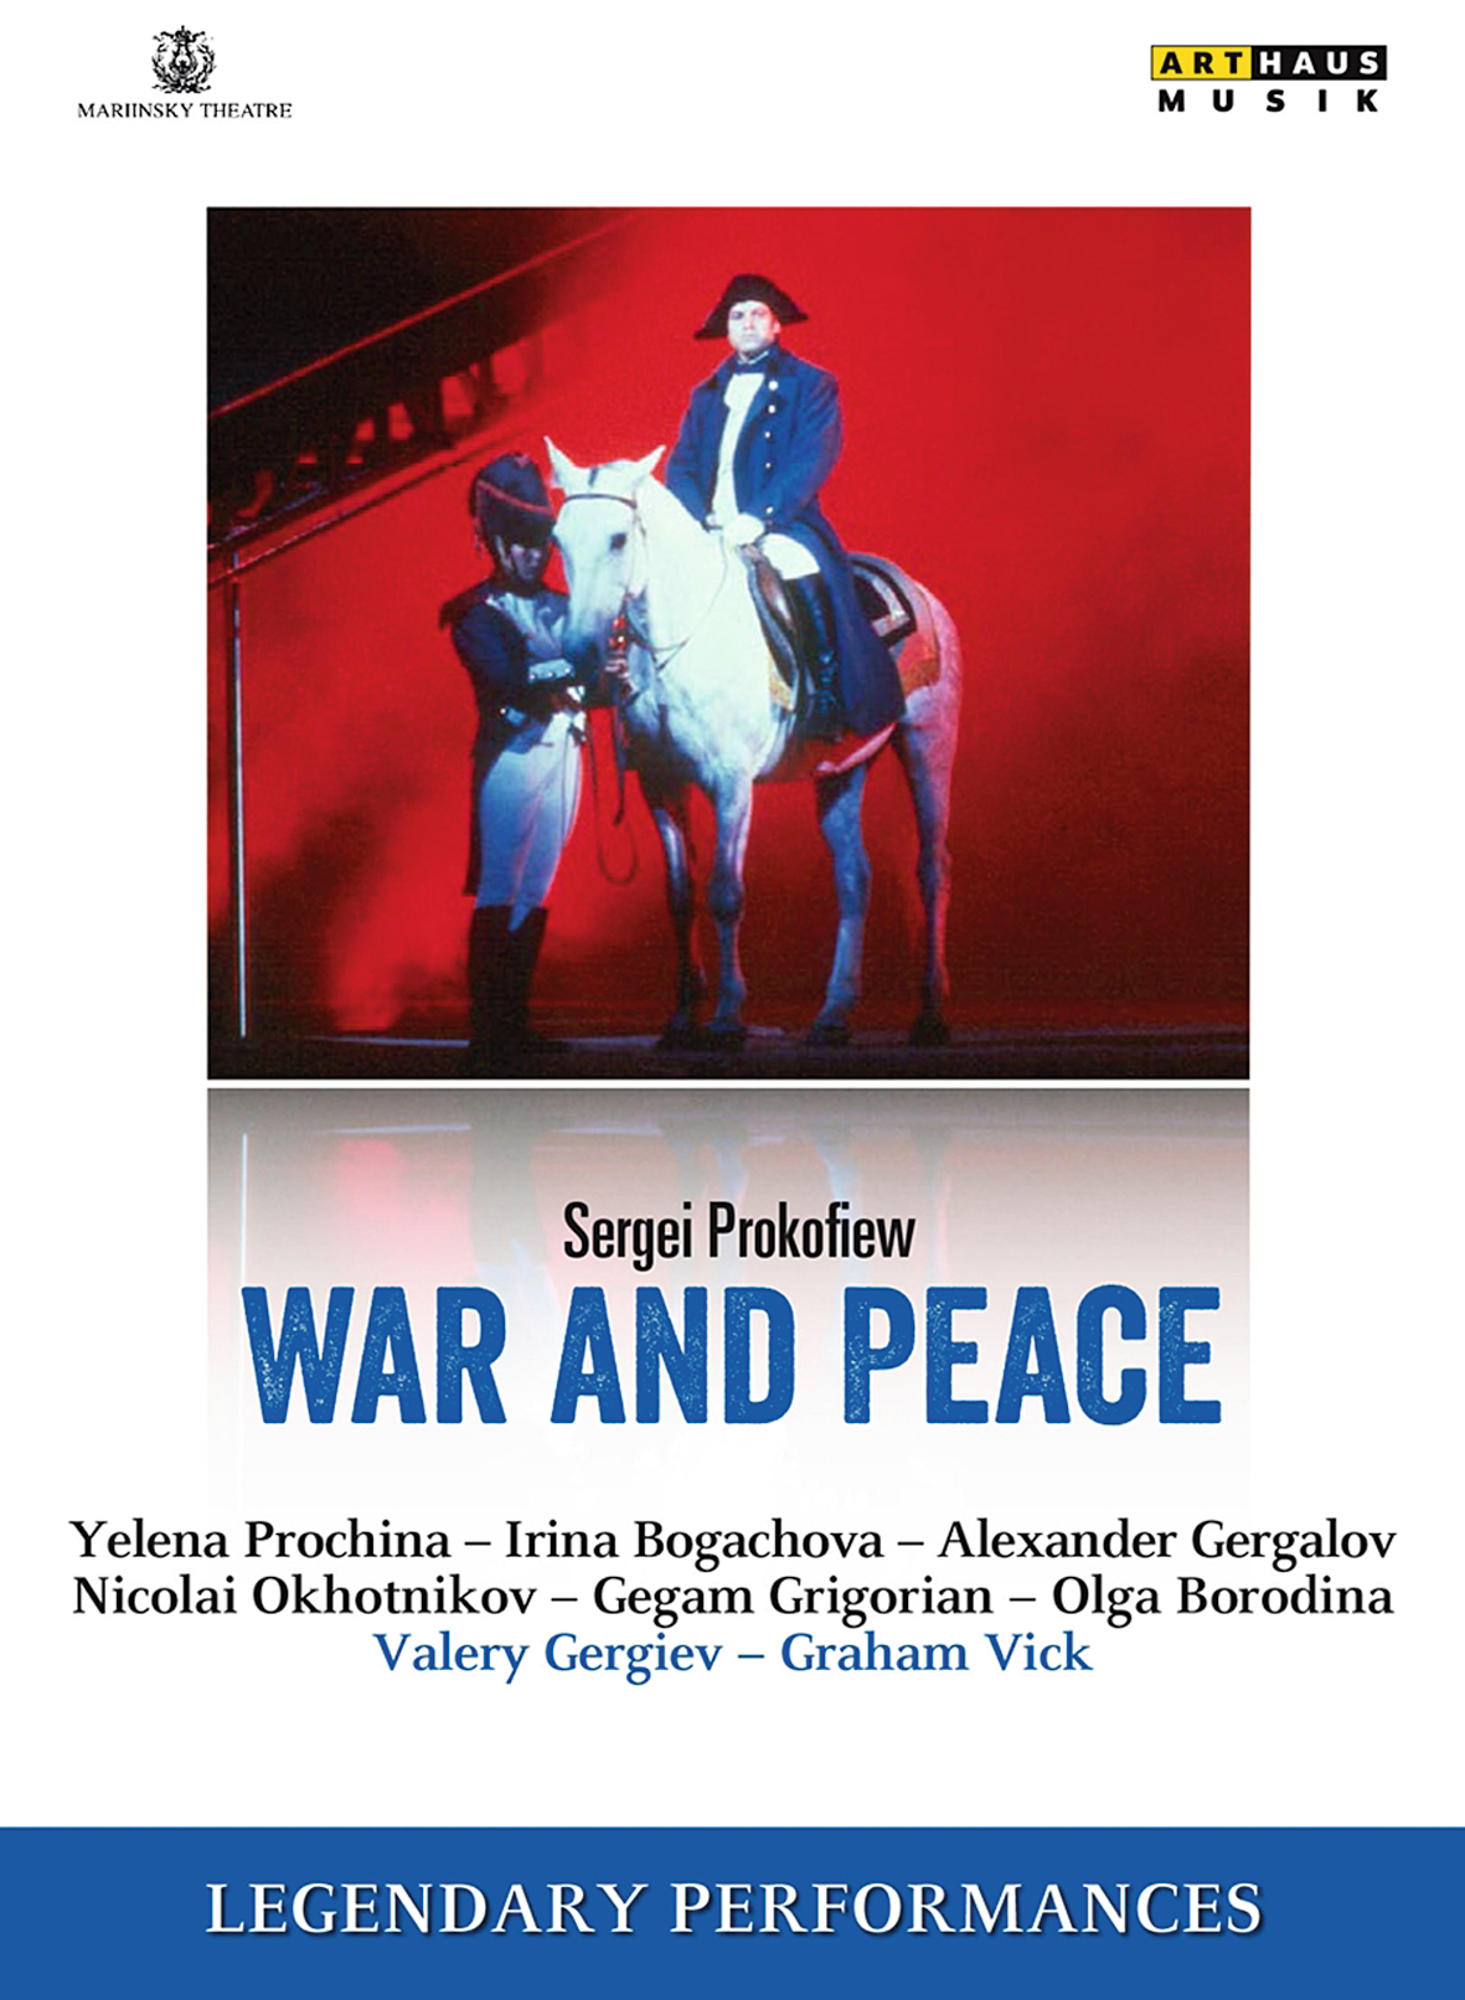 Alexander Gergalov, Kirov - Vassily Und Prokina, Orchestra Gegam Borodina, Olga Grigorian, - Frieden Krieg (DVD) Elena Gerelo